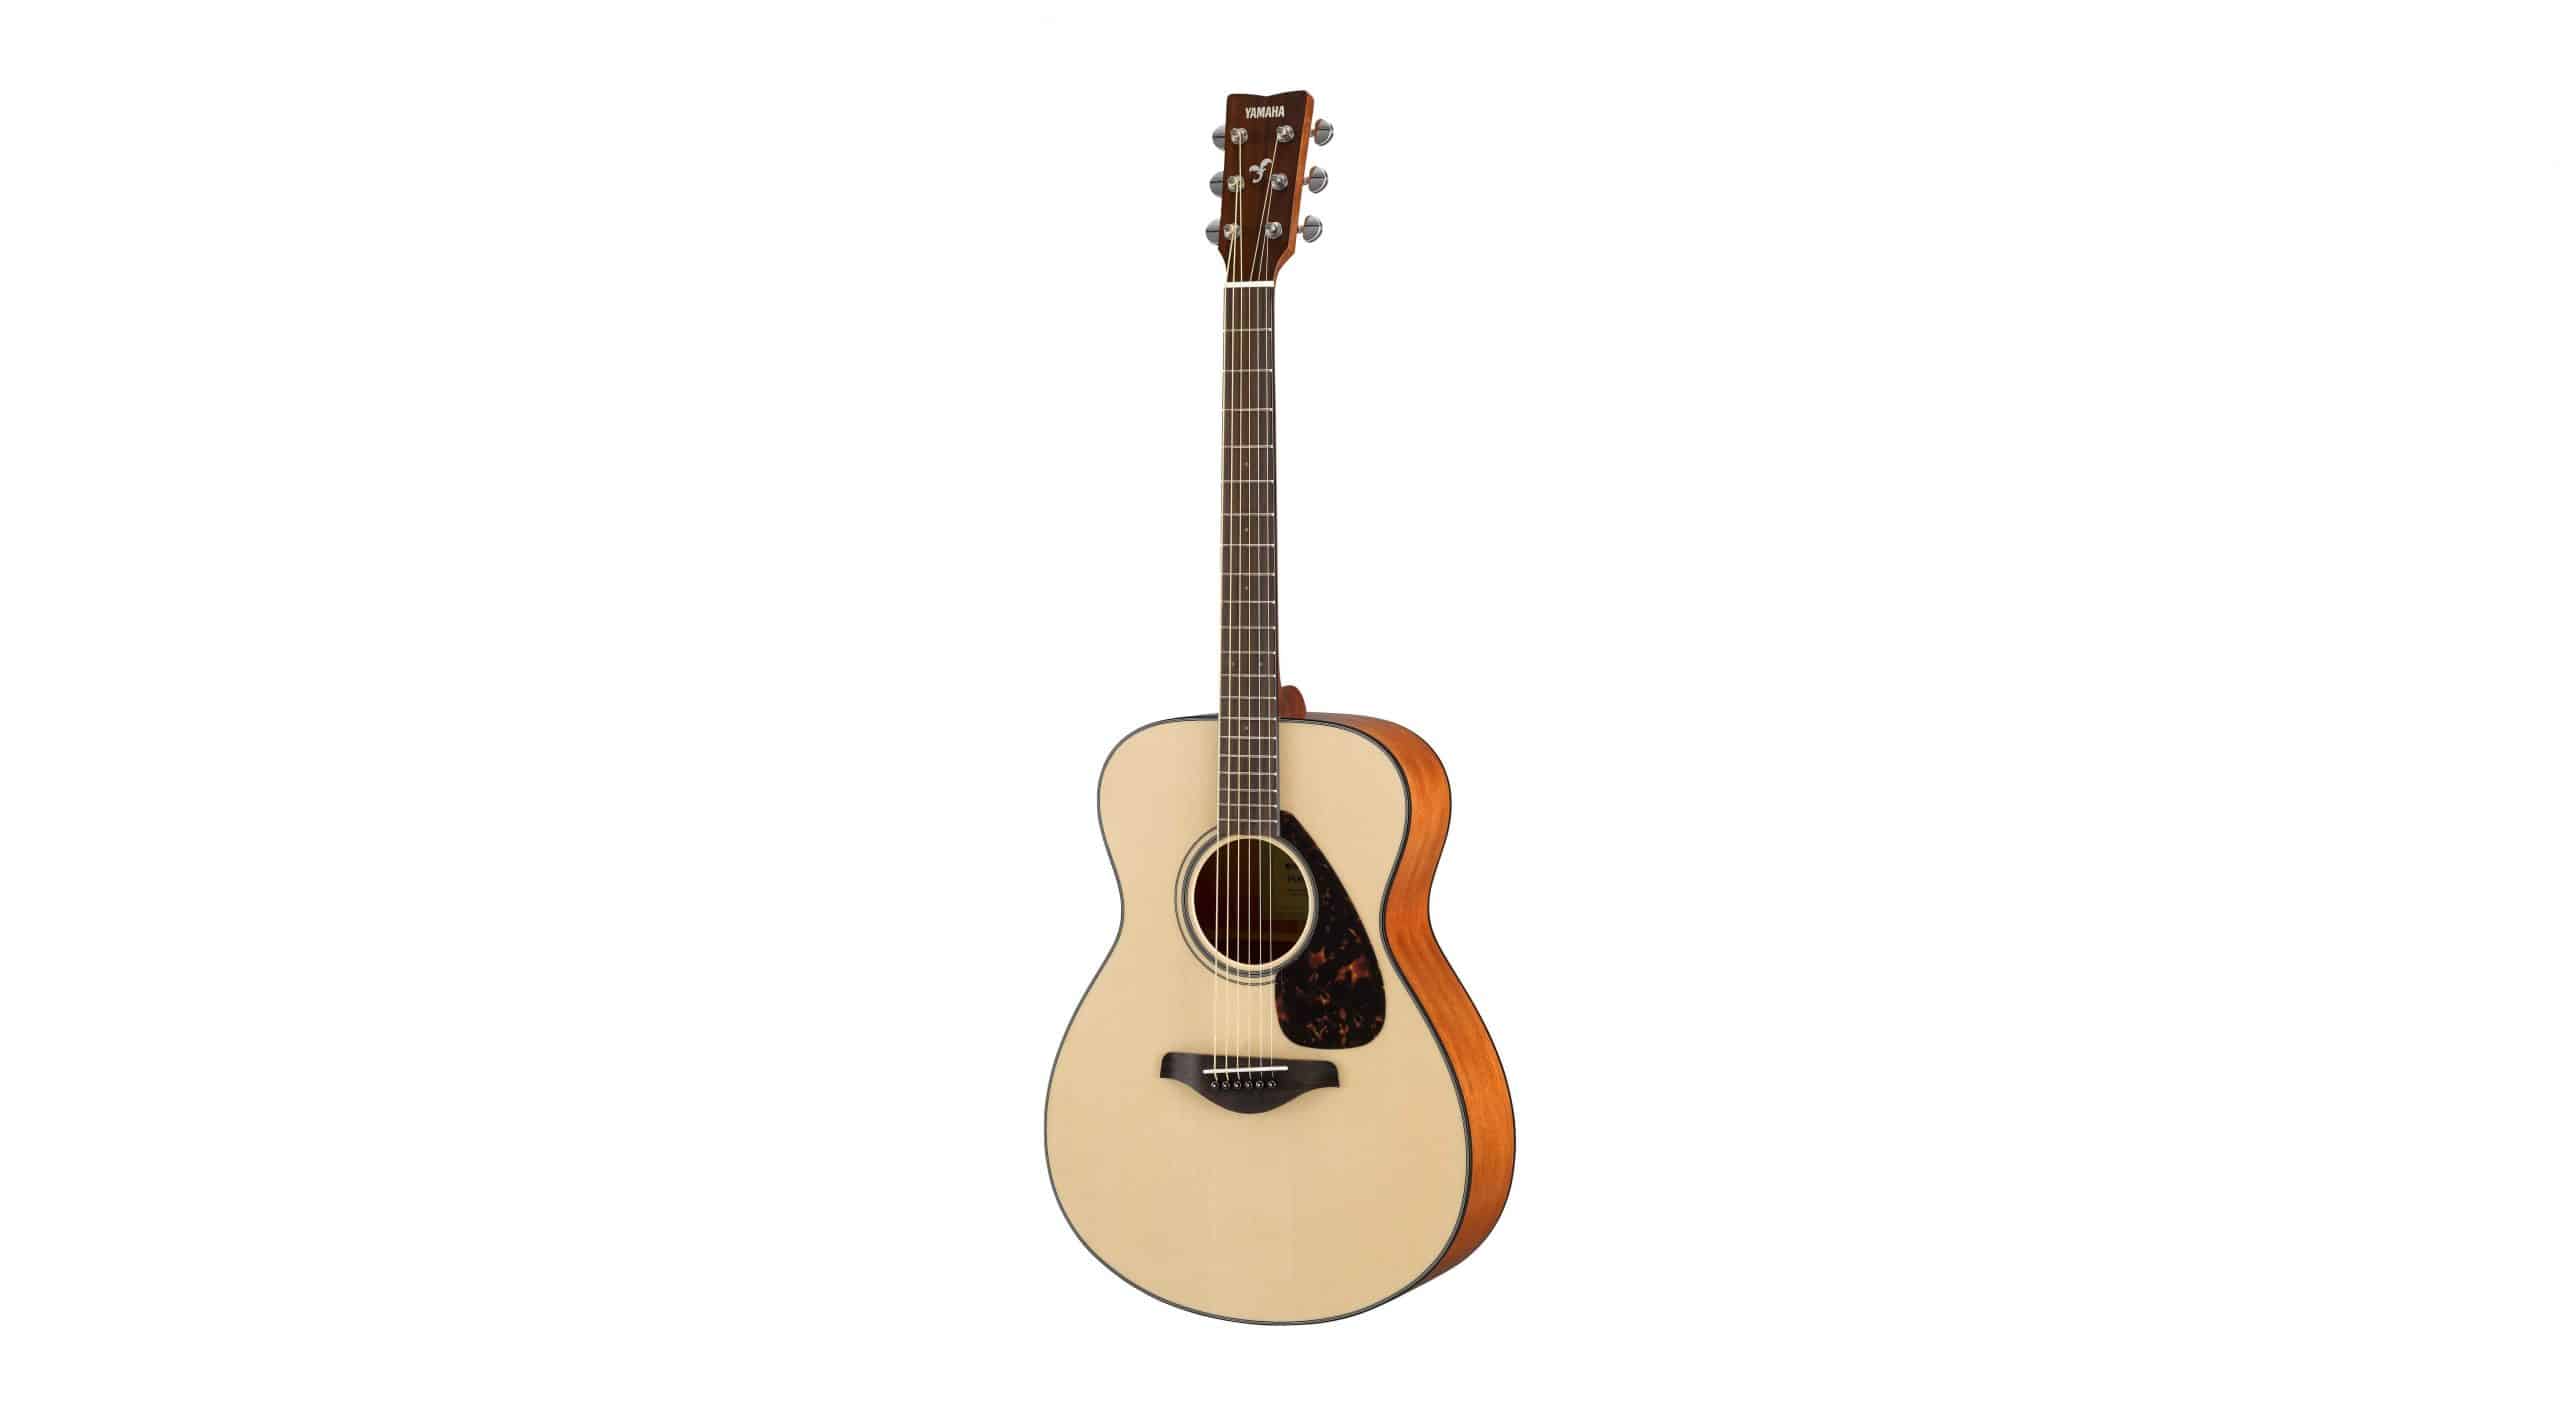 Yamaha FS800 Acoustic Guitar Review